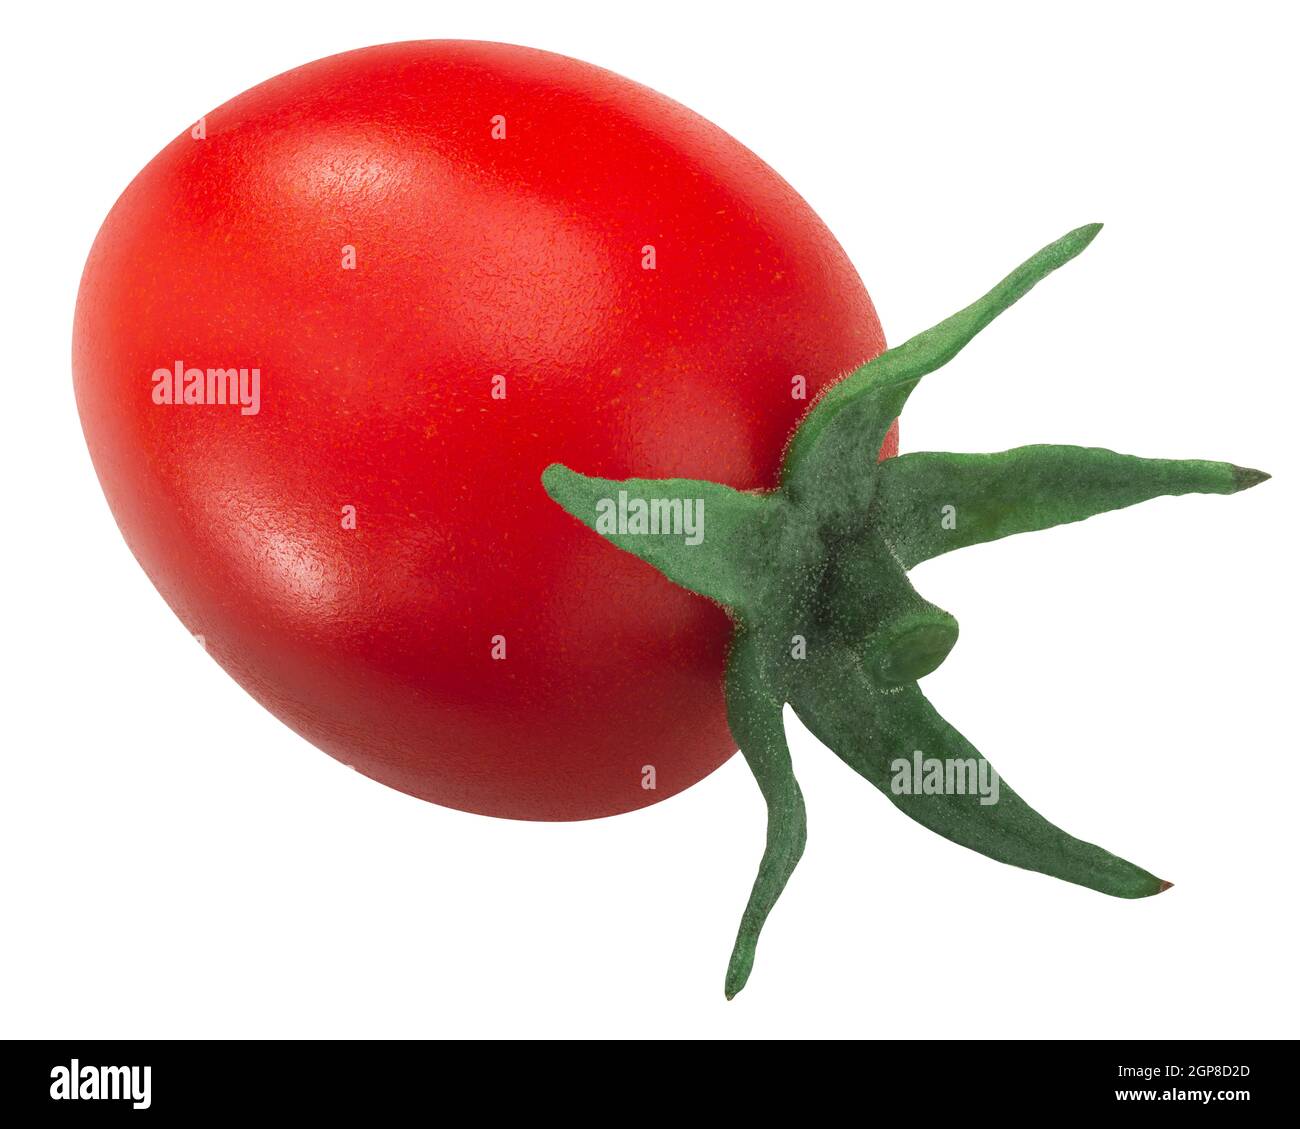 Principe Borghese cherry tomato, isolated Stock Photo